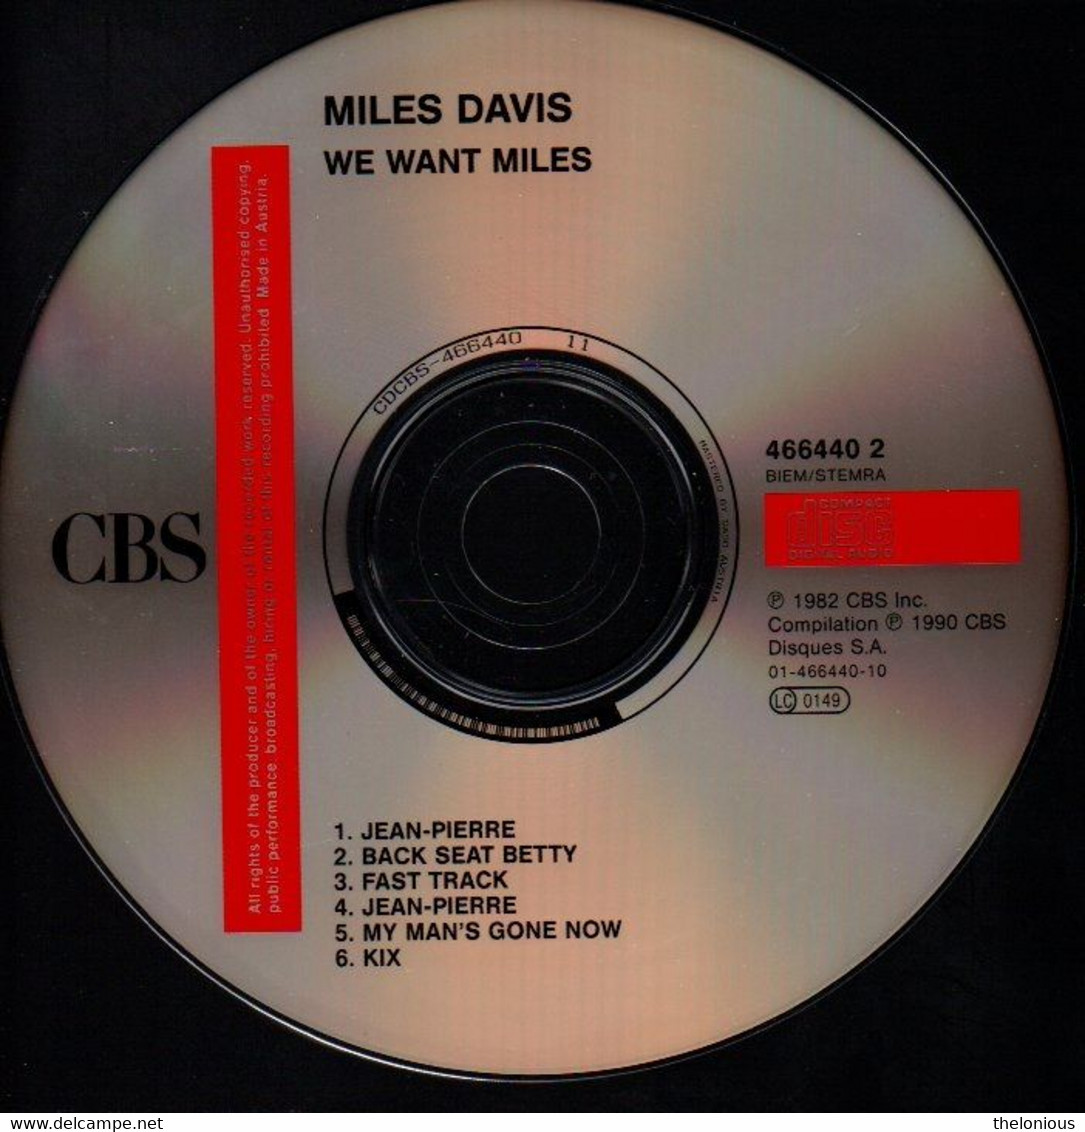 # CD: Miles Davis - We Want Miles - CBS 466440 - Jazz